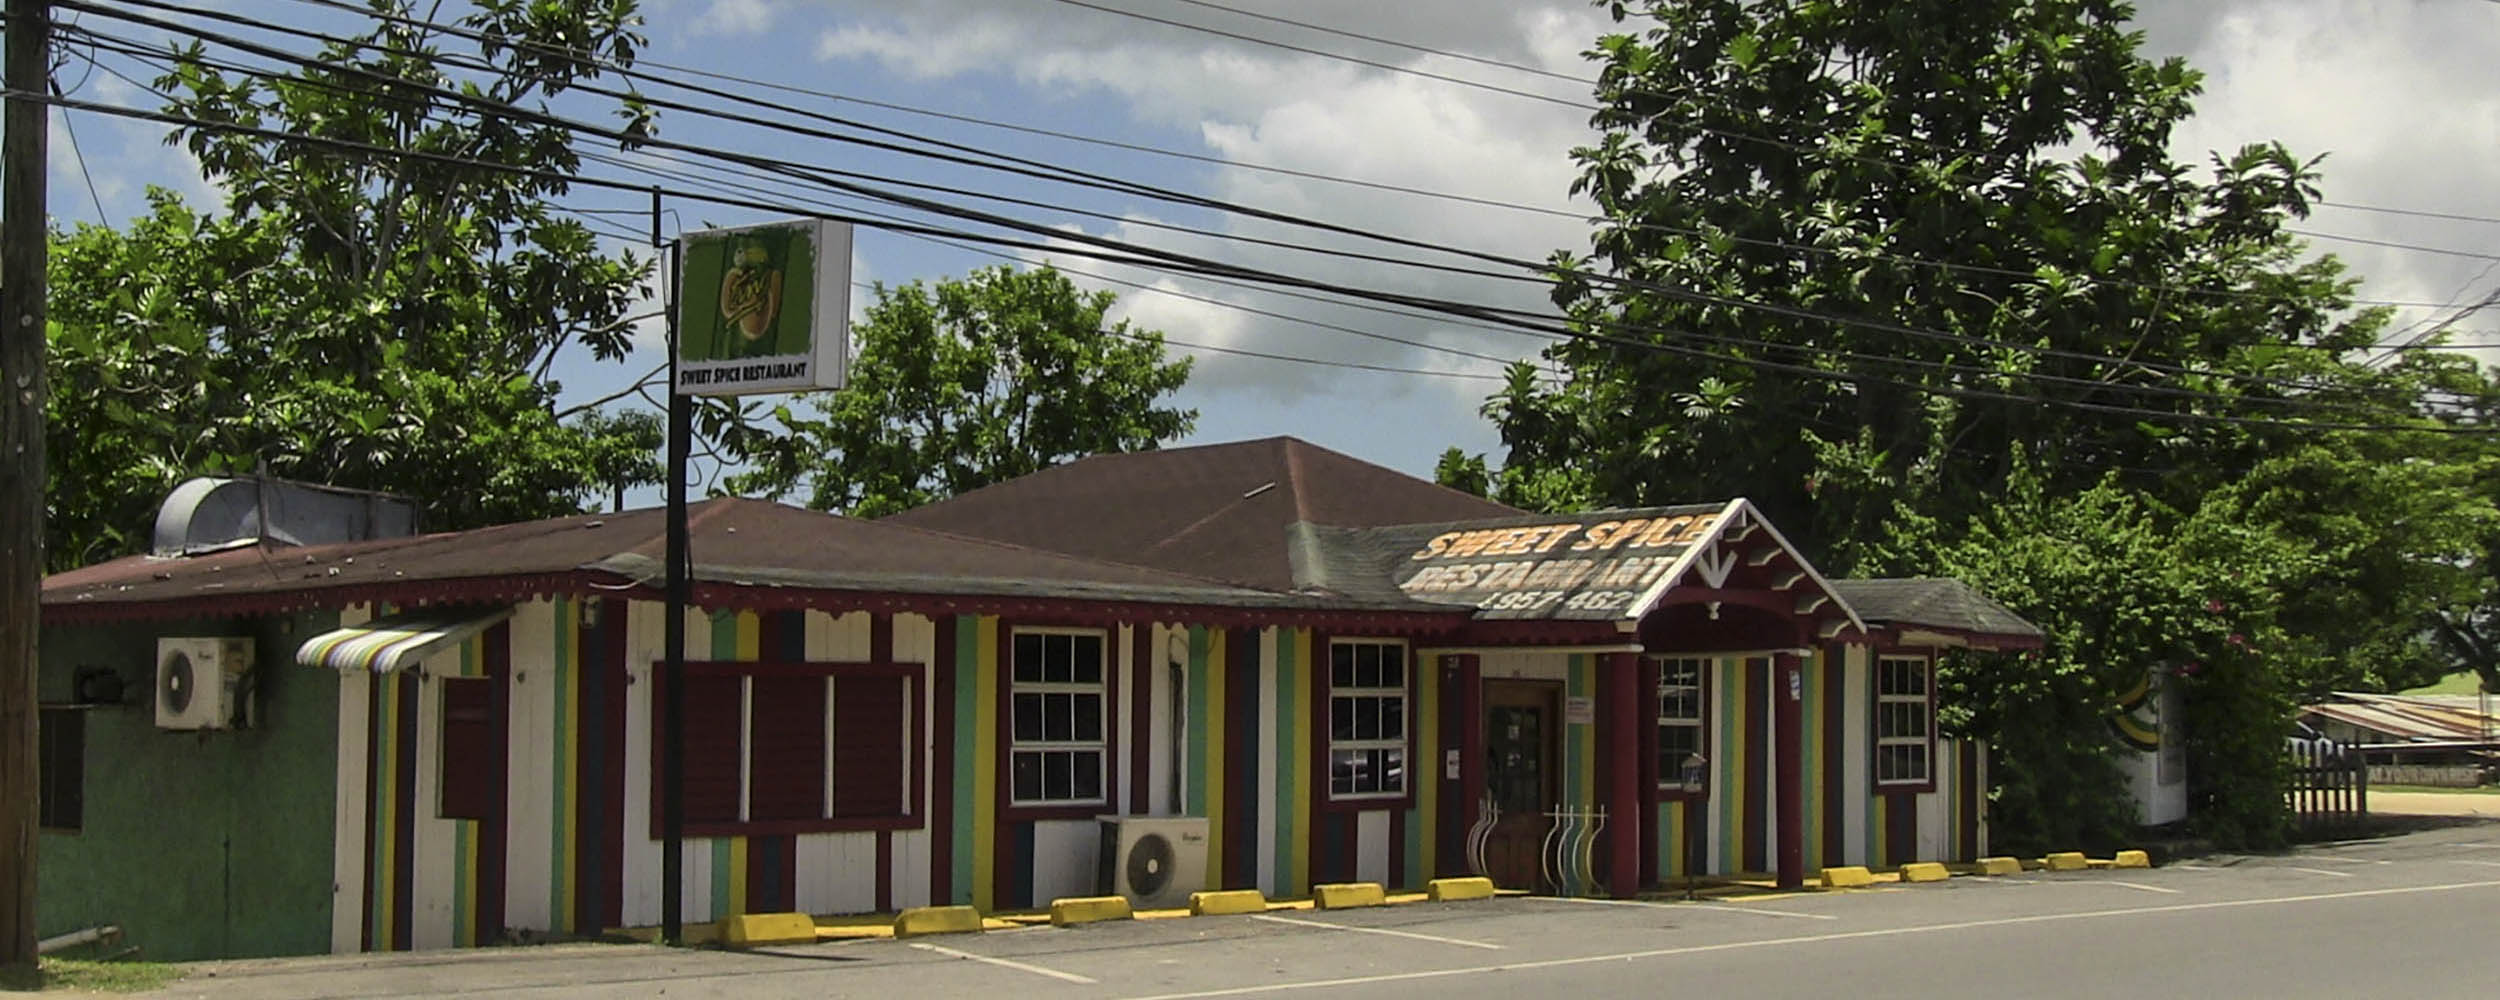 Sweet Spice Restaurant, Nonpareil Road, Negril Jamaica